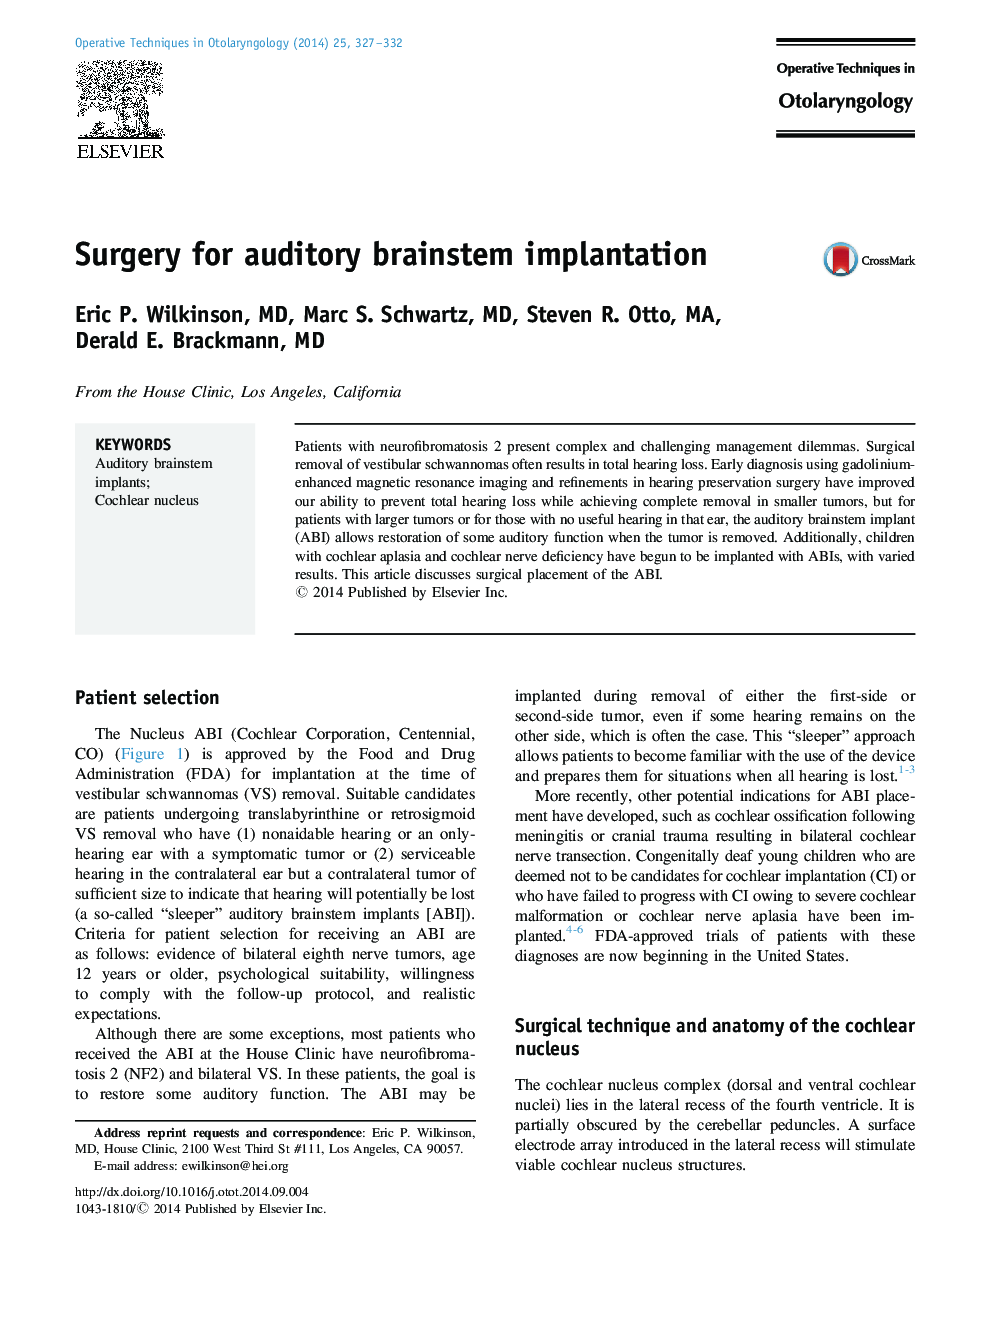 Surgery for auditory brainstem implantation